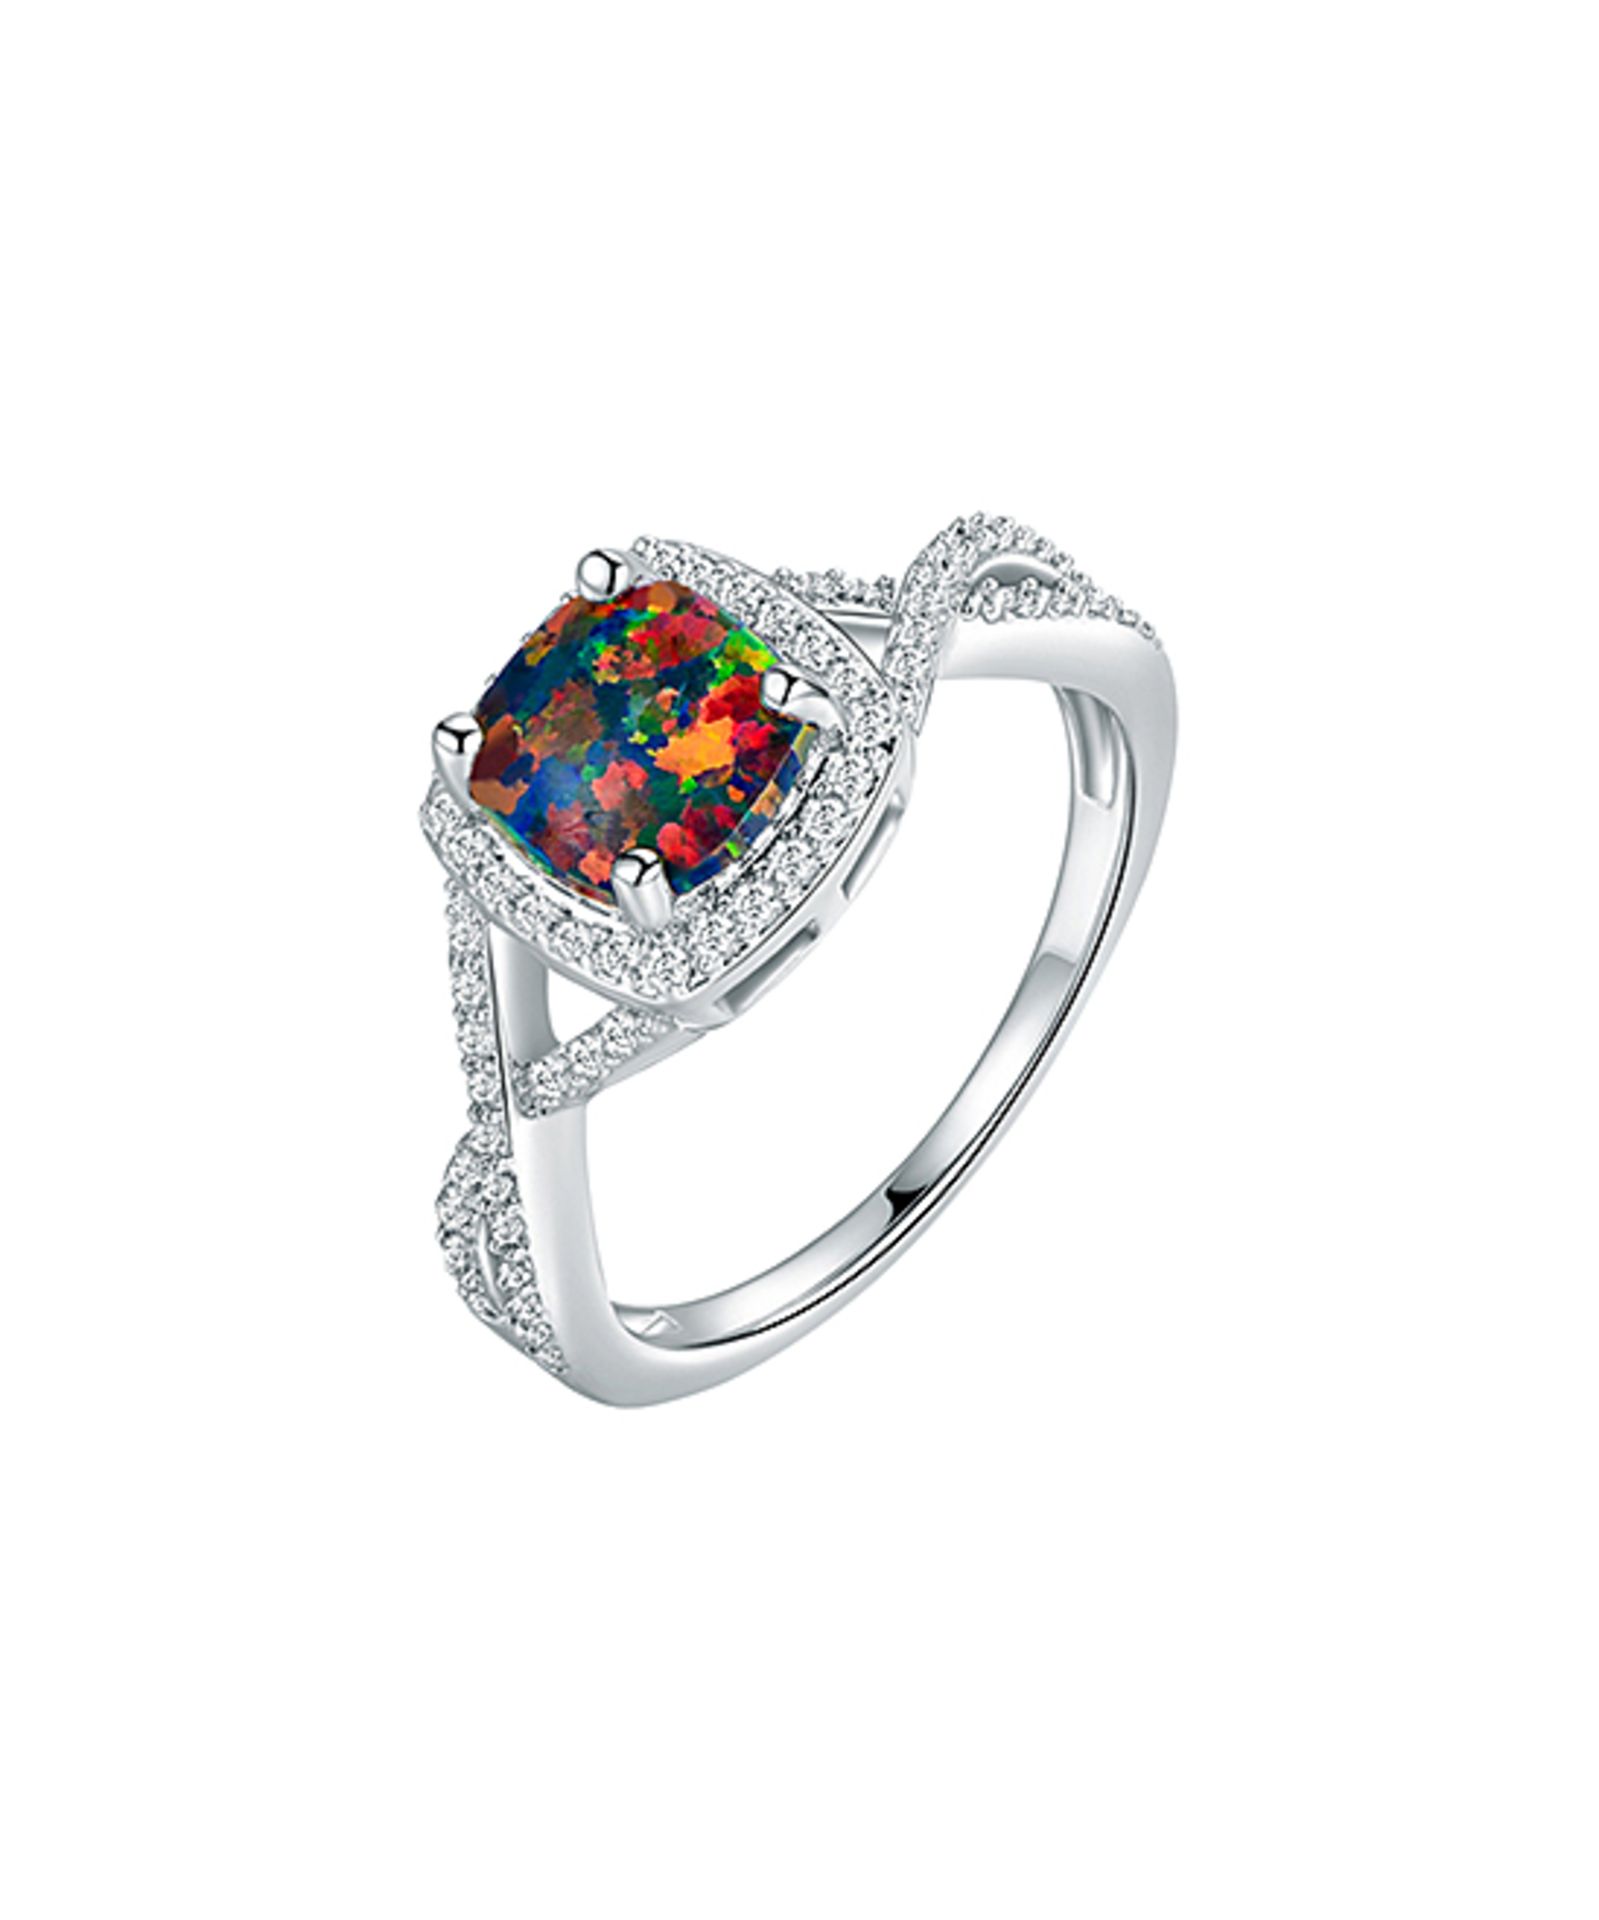 Peermont Black Opal & Silvertone Ring (Size: Size 5) [Ref: 41853407-Box 1]